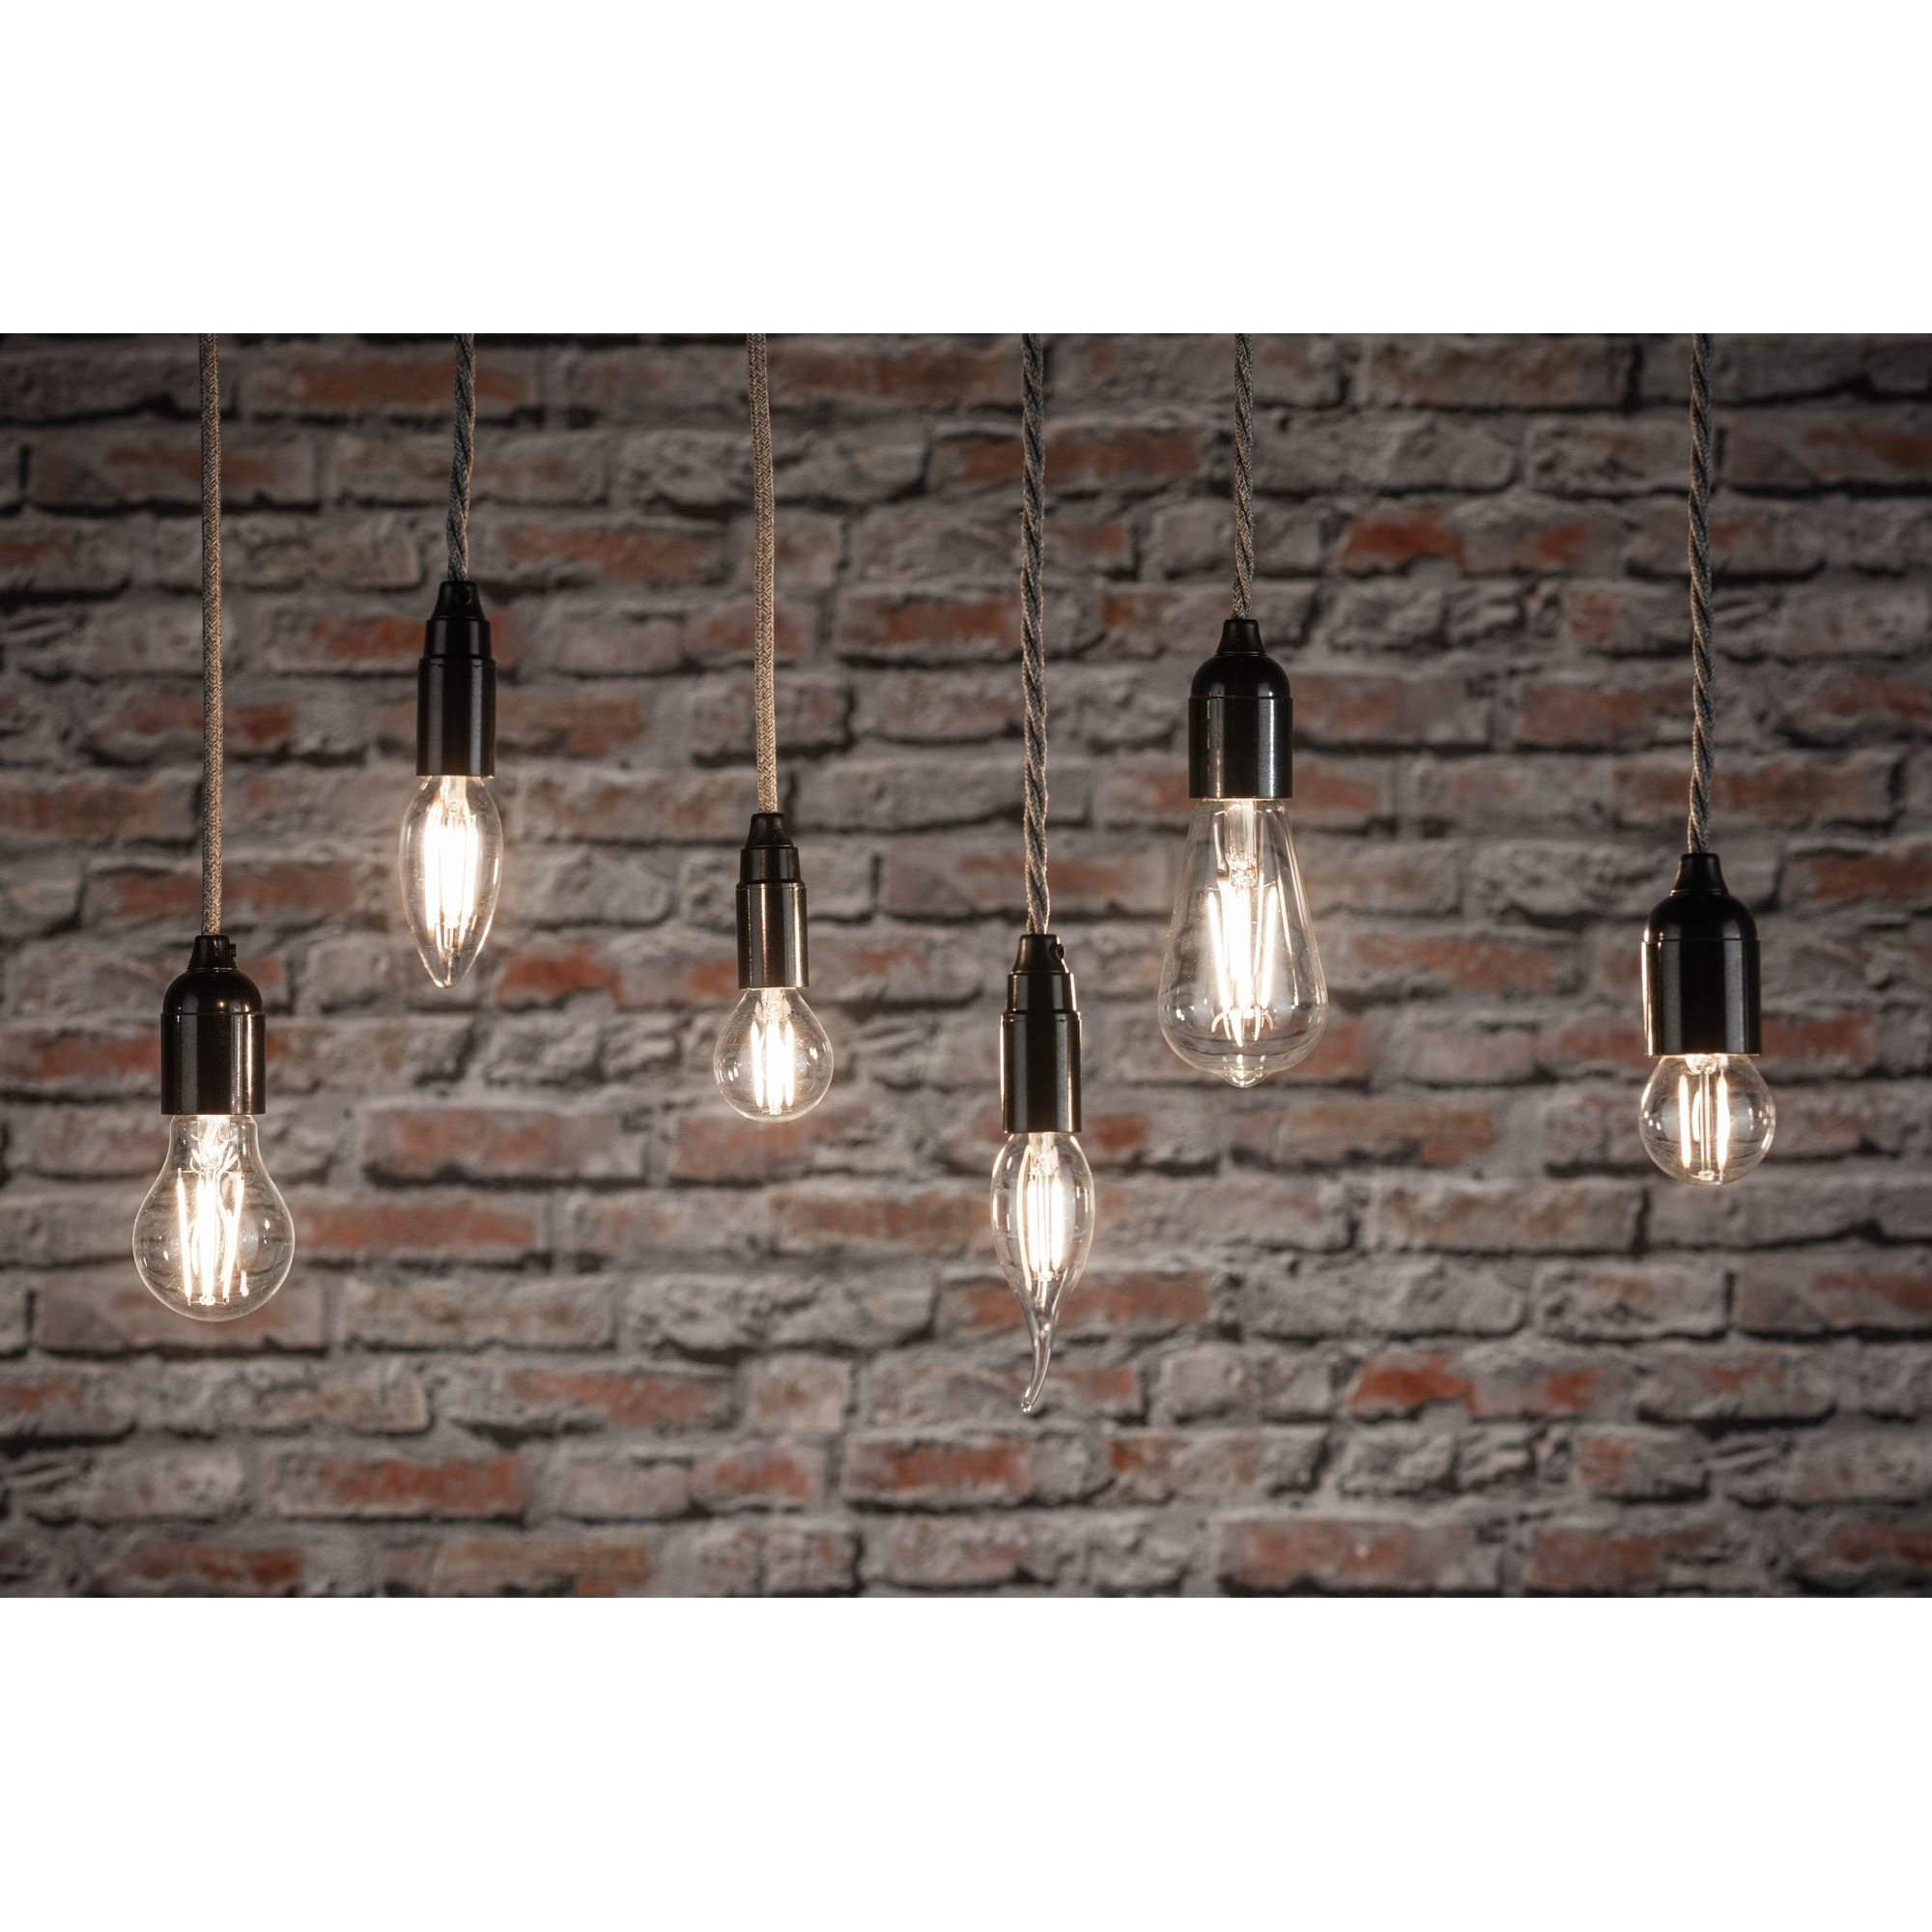 LED-Tropfenlampe E14 2,6W (26W) 250 lm warmweiß klar + product picture